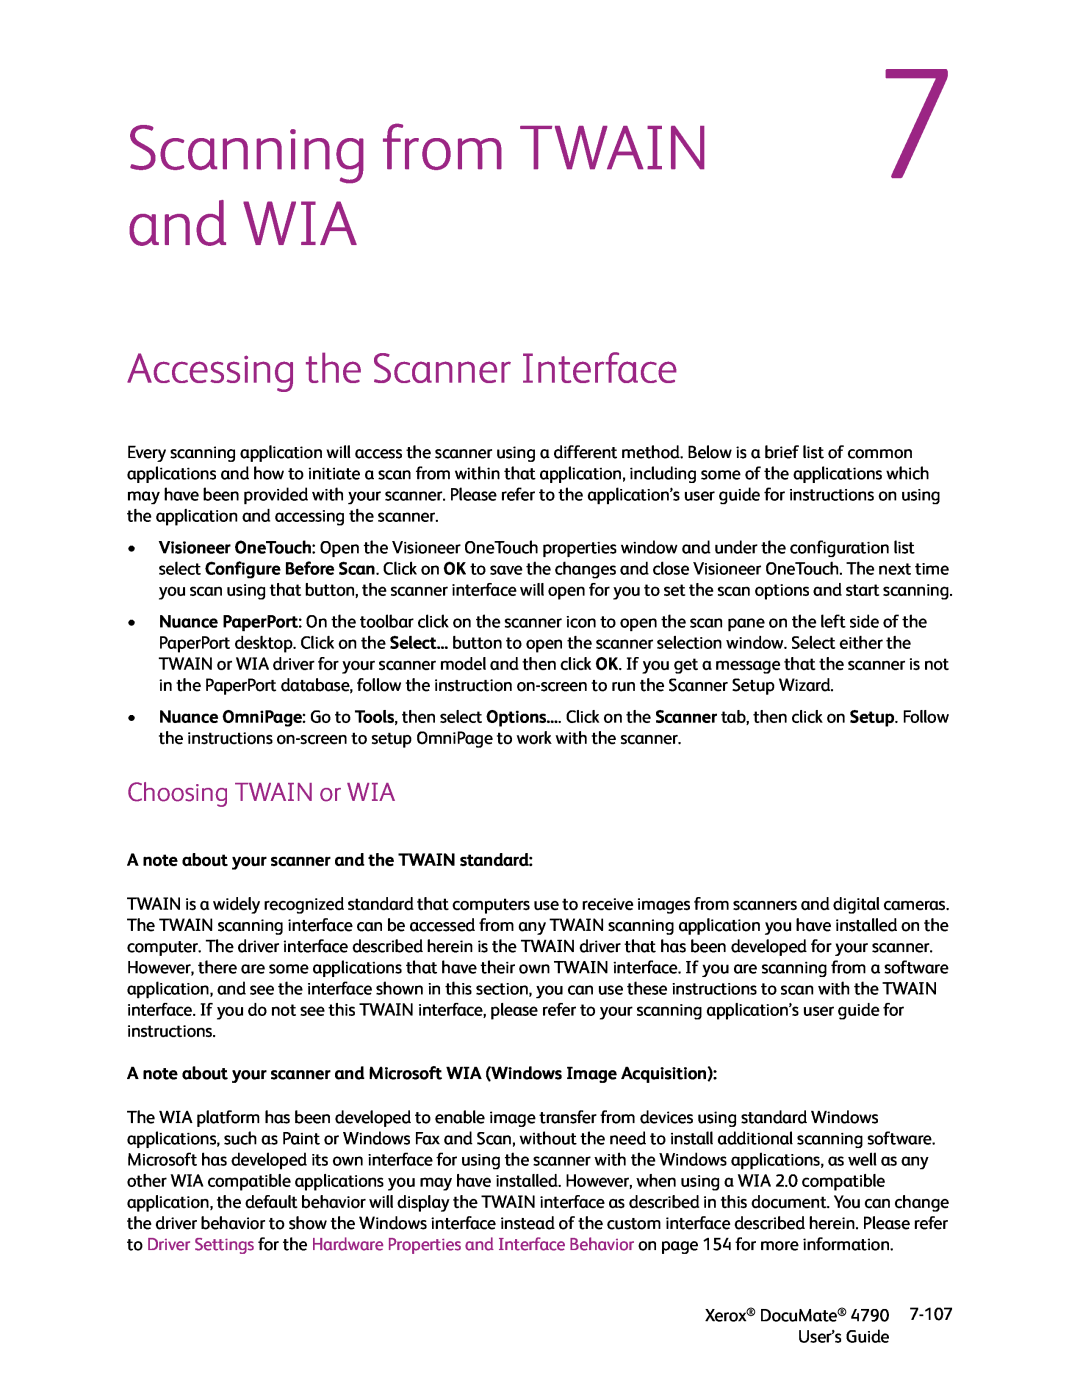 Xerox xerox documate manual Scanning from TWAIN, and WIA, Accessing the Scanner Interface, Choosing TWAIN or WIA 